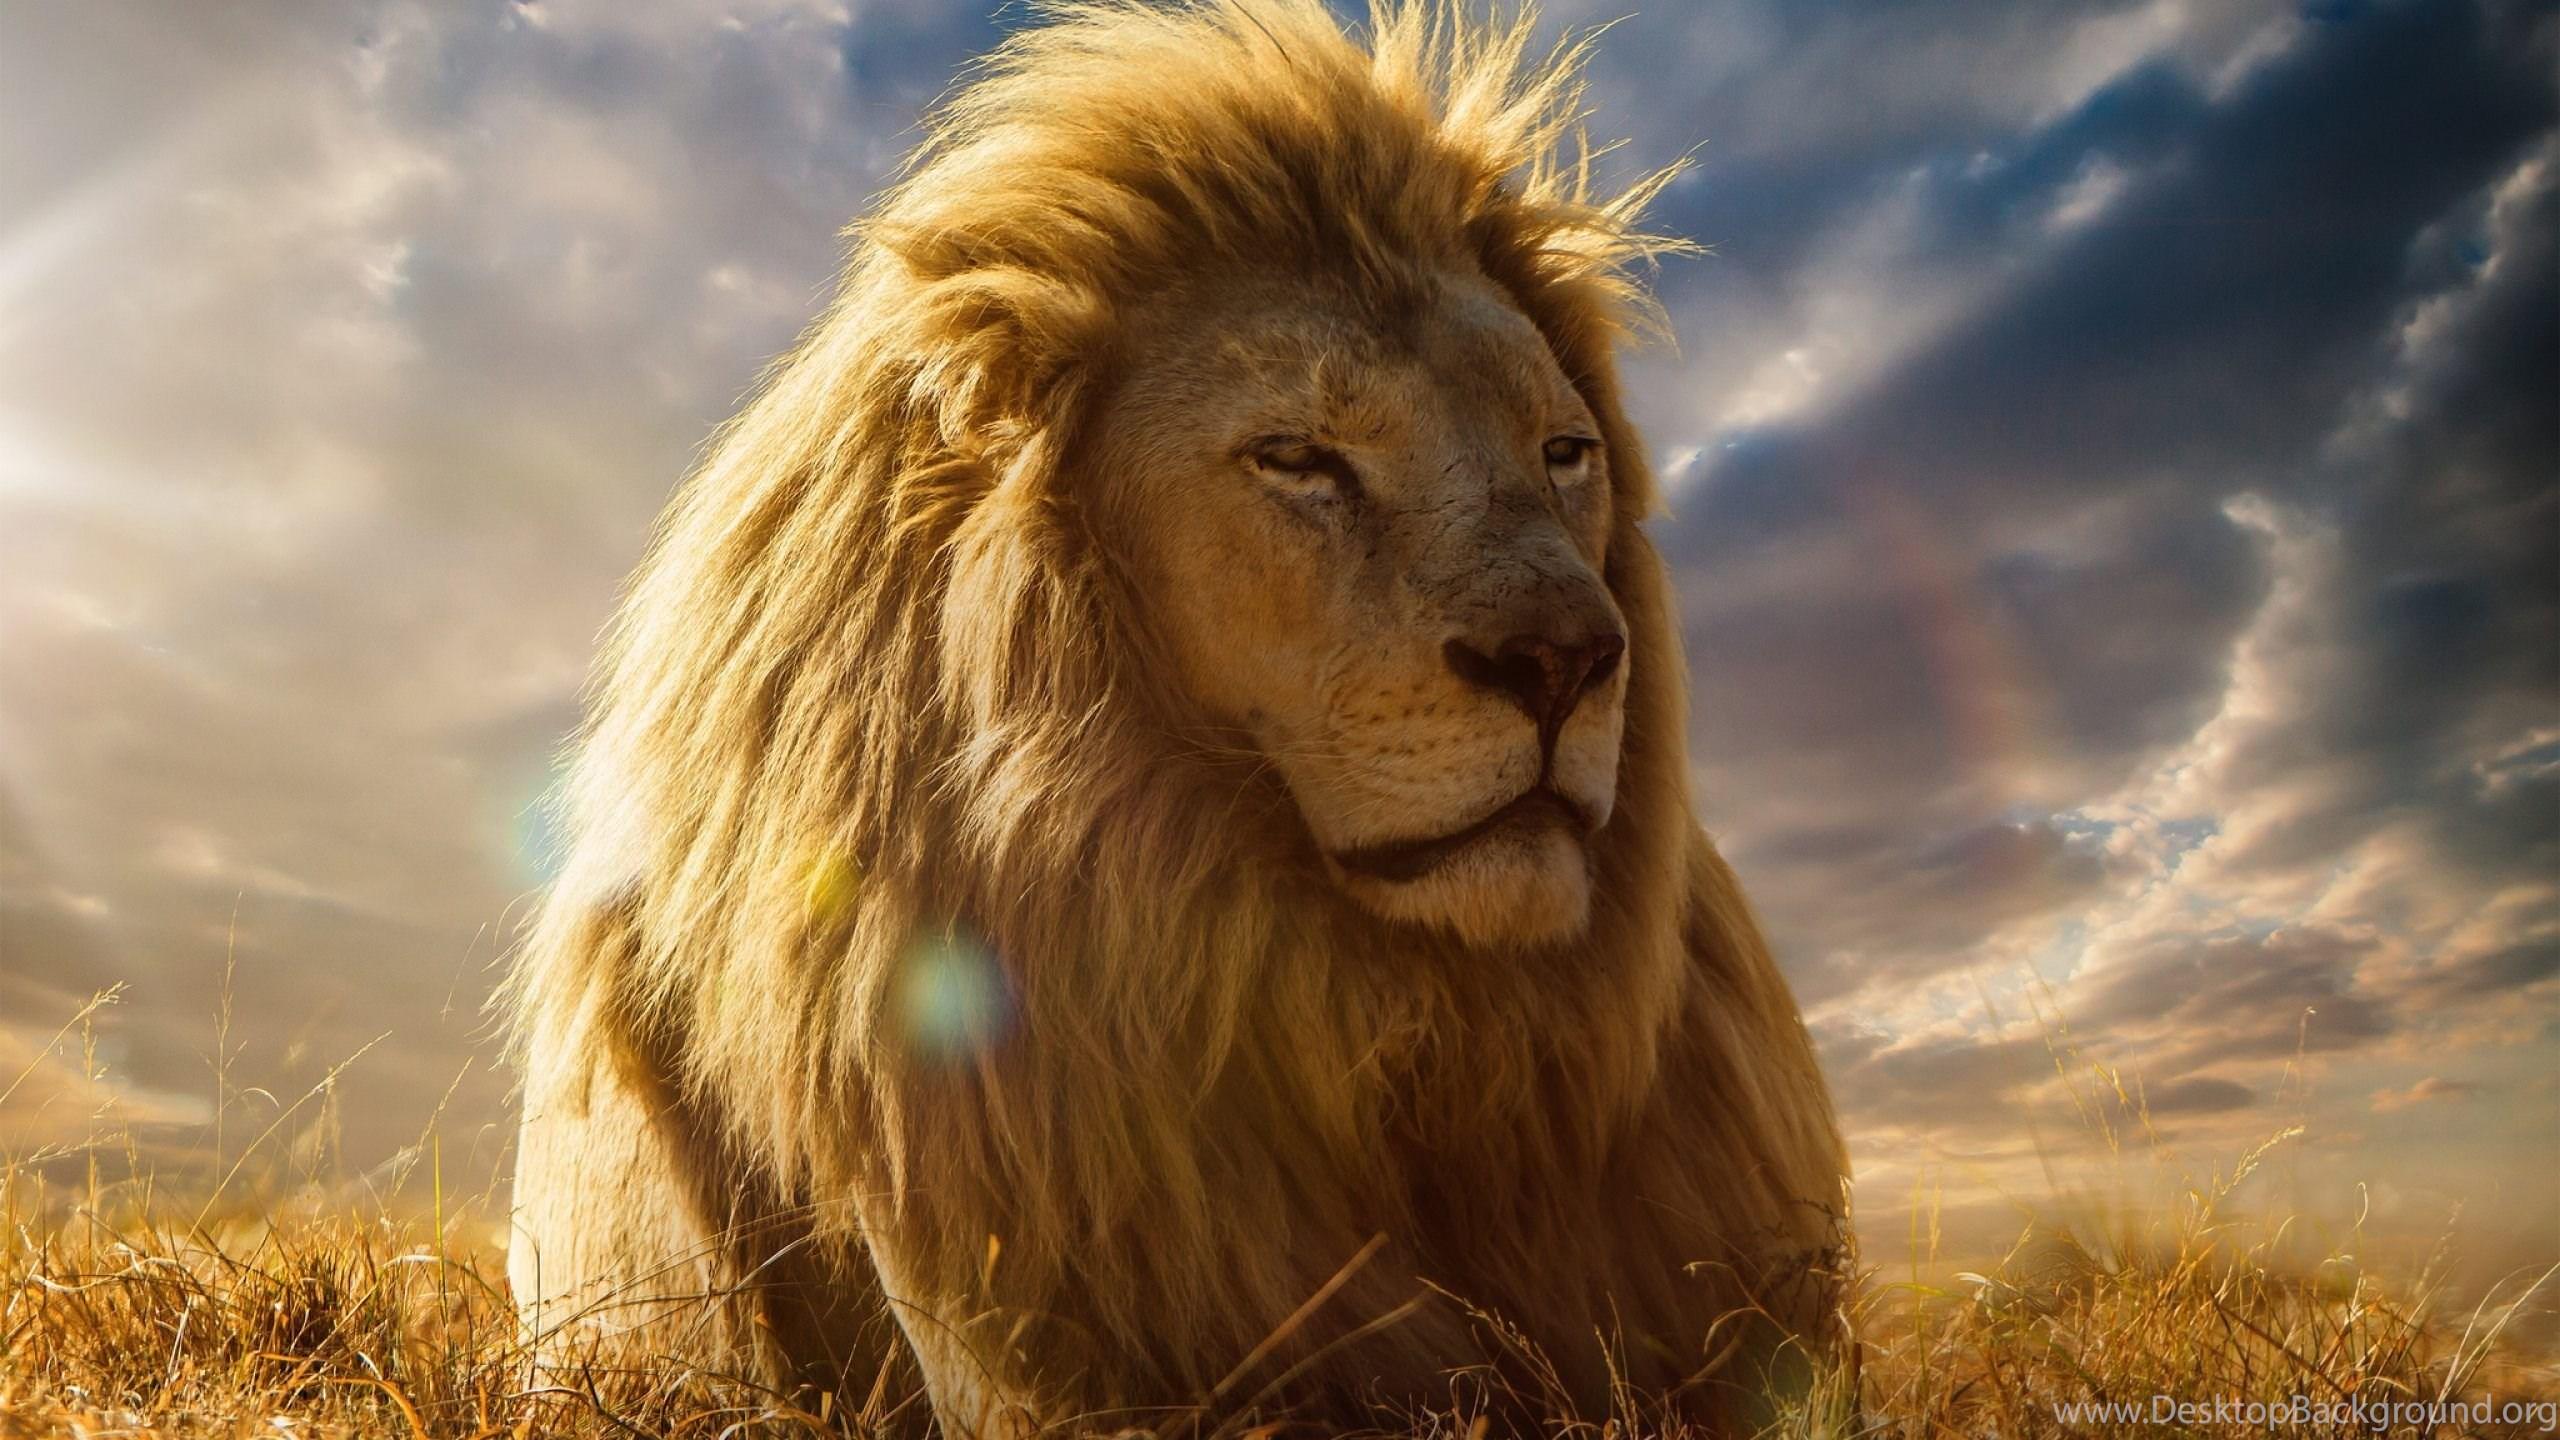 2560 x 1440 · jpeg - African Big Lion Wallpapers For Desktop In 1080p High Quality Desktop ...